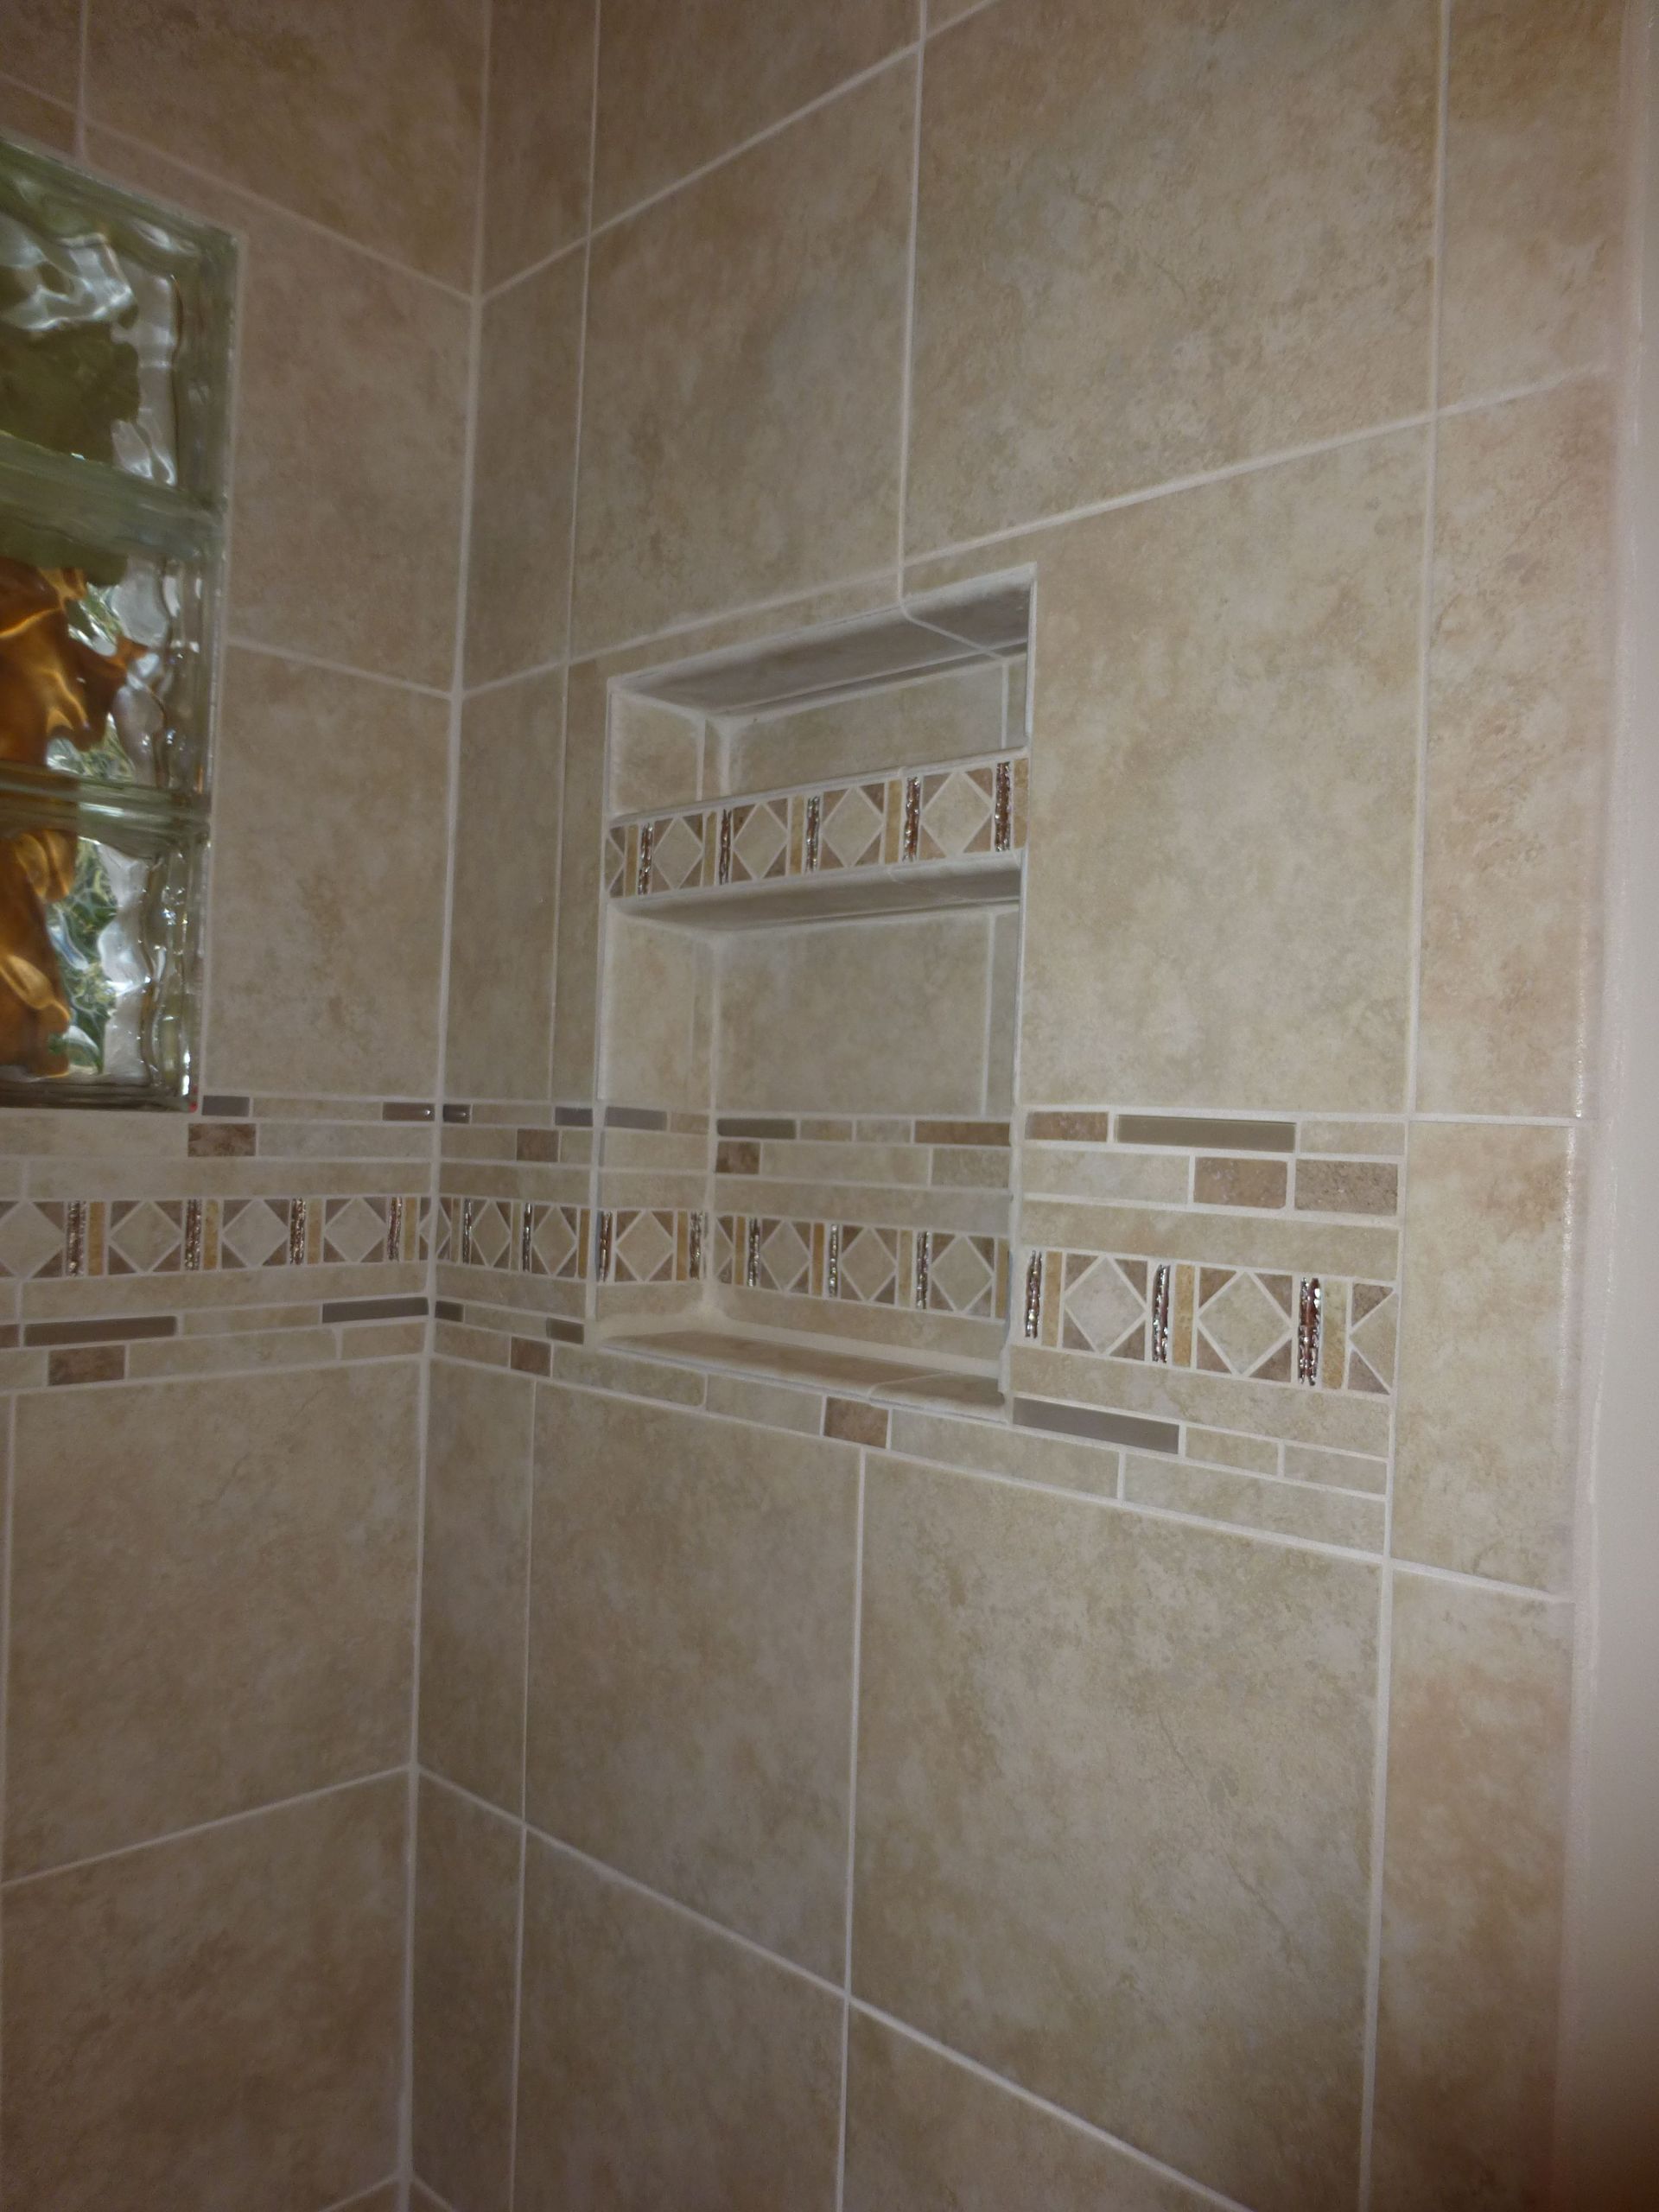 Lowes Bathroom Tile
 Capri Classic tile from Lowes Shower Surrounds